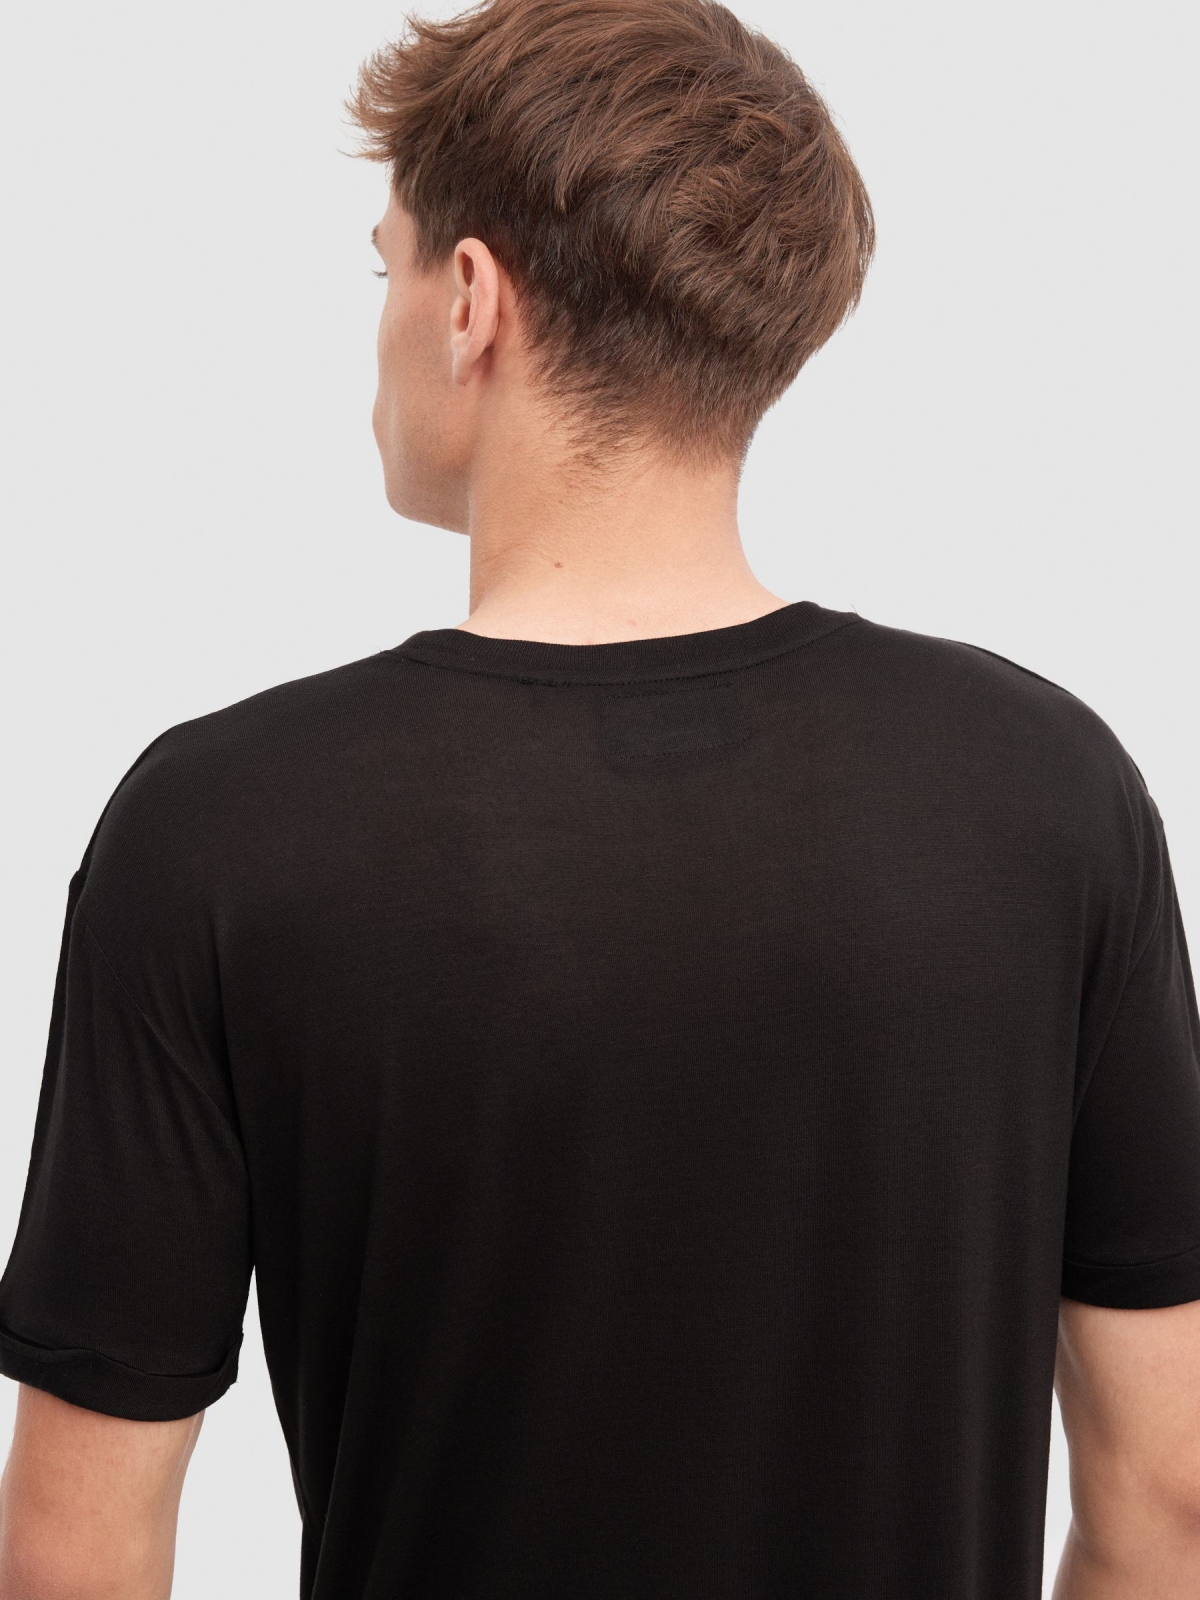 Long basic t-shirt black detail view